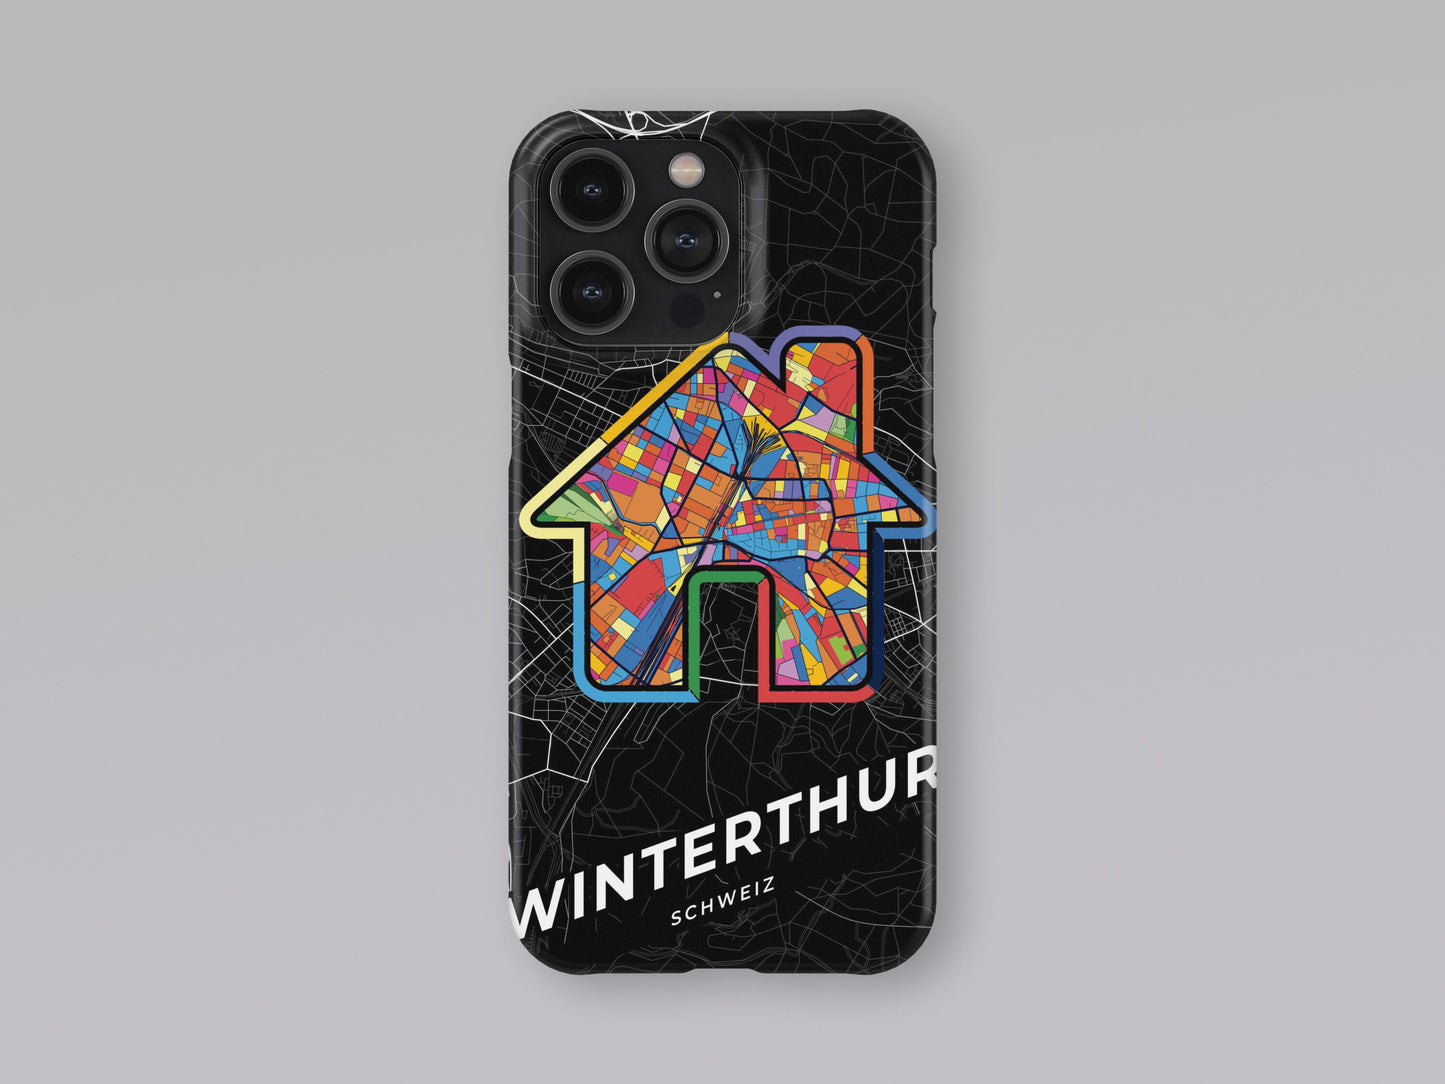 Winterthur Switzerland slim phone case with colorful icon 3